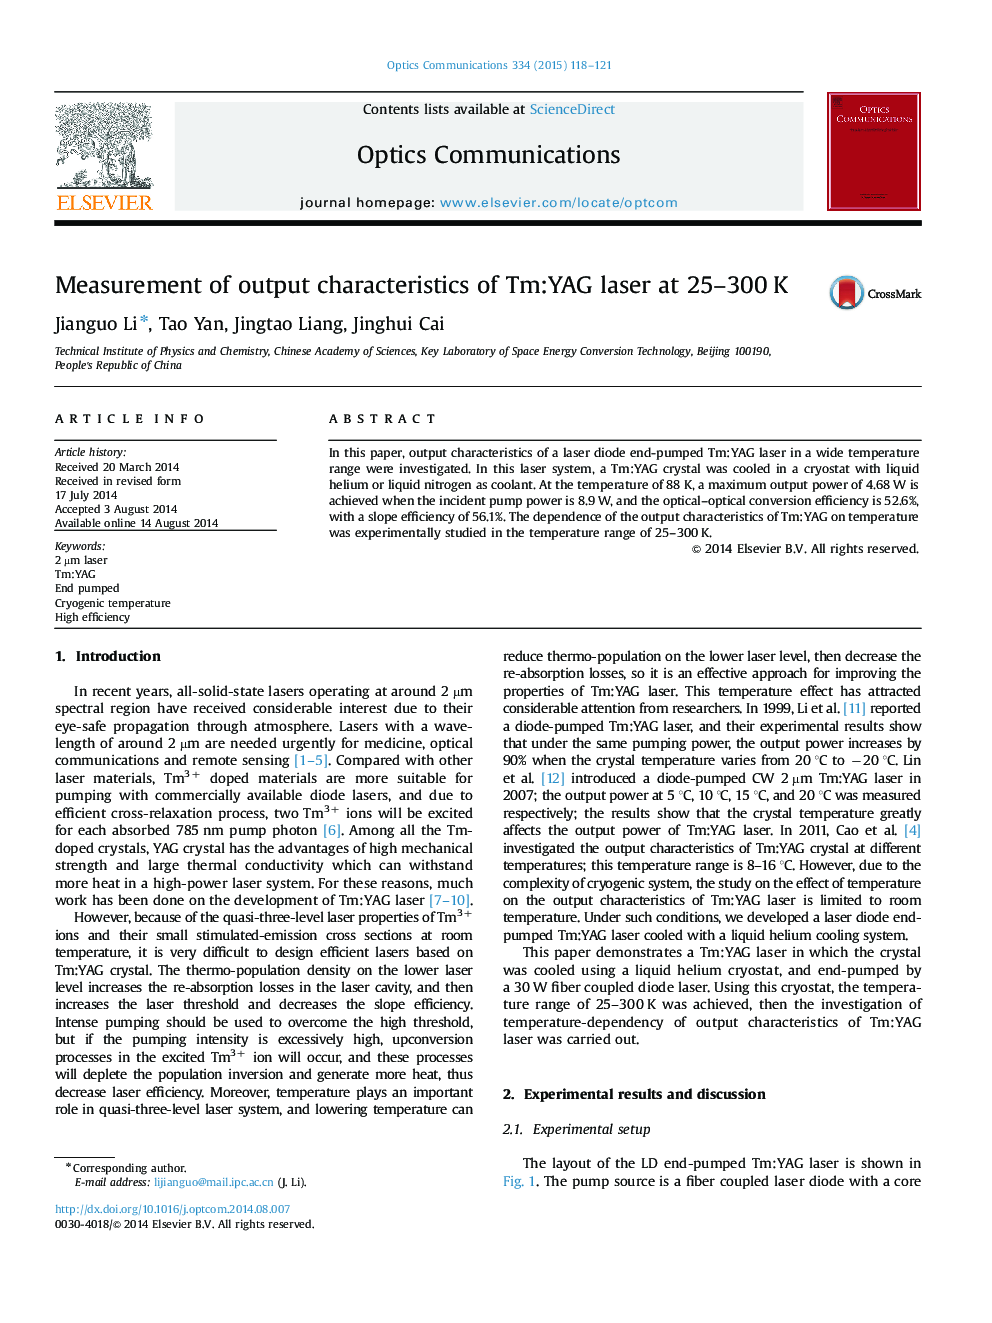 Measurement of output characteristics of Tm:YAG laser at 25-300Â K